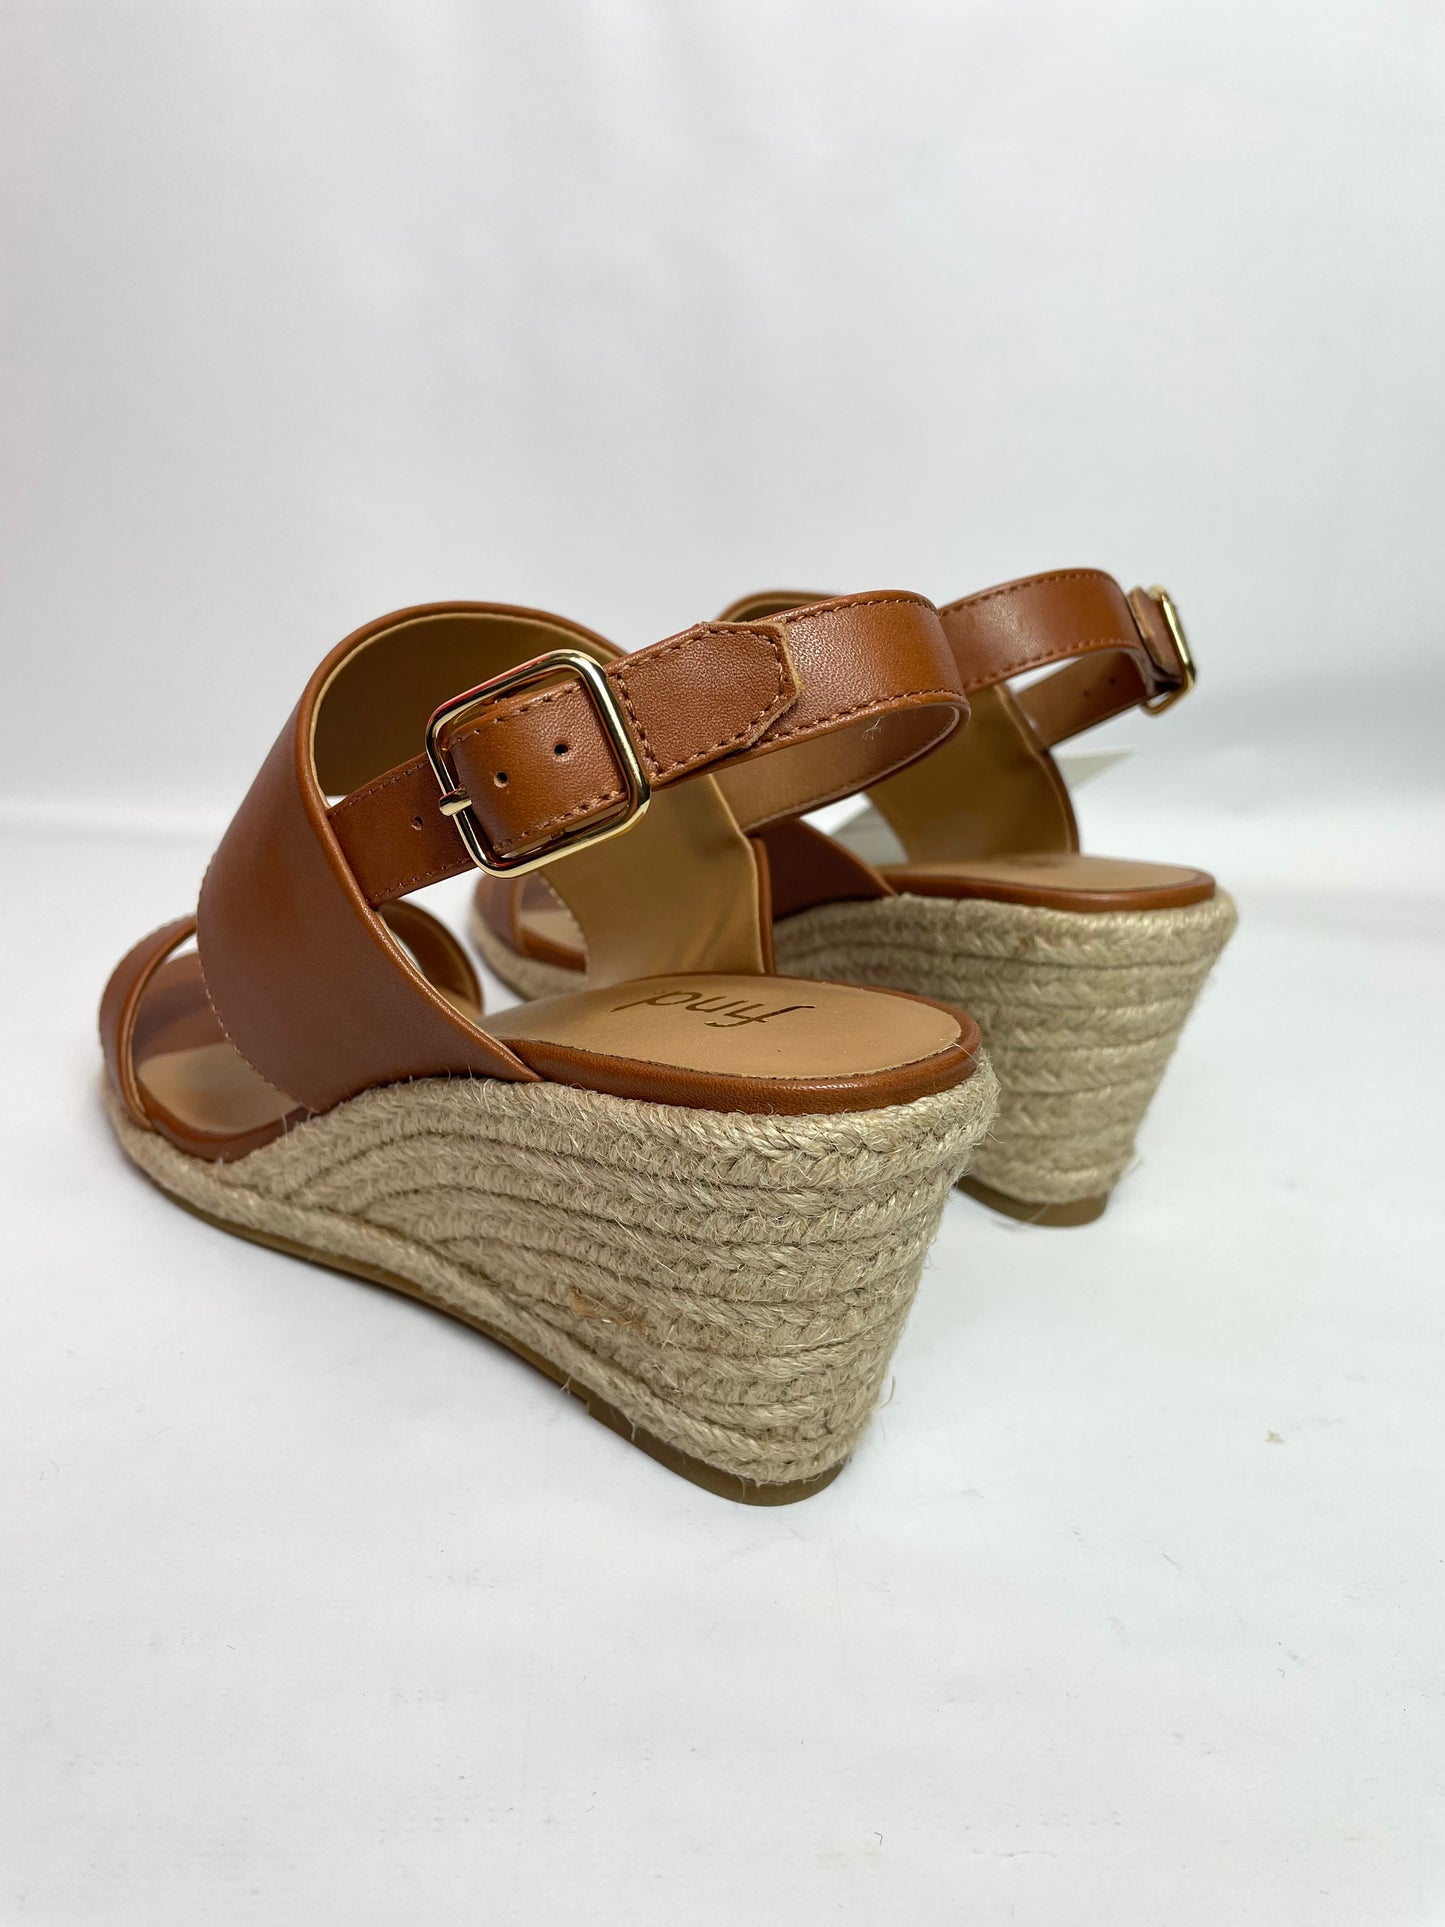 Women’s Handmade Espadrilles Sandals Ankle Strap Buckle Wedge Sandal in Brown UK 3 / EU 36